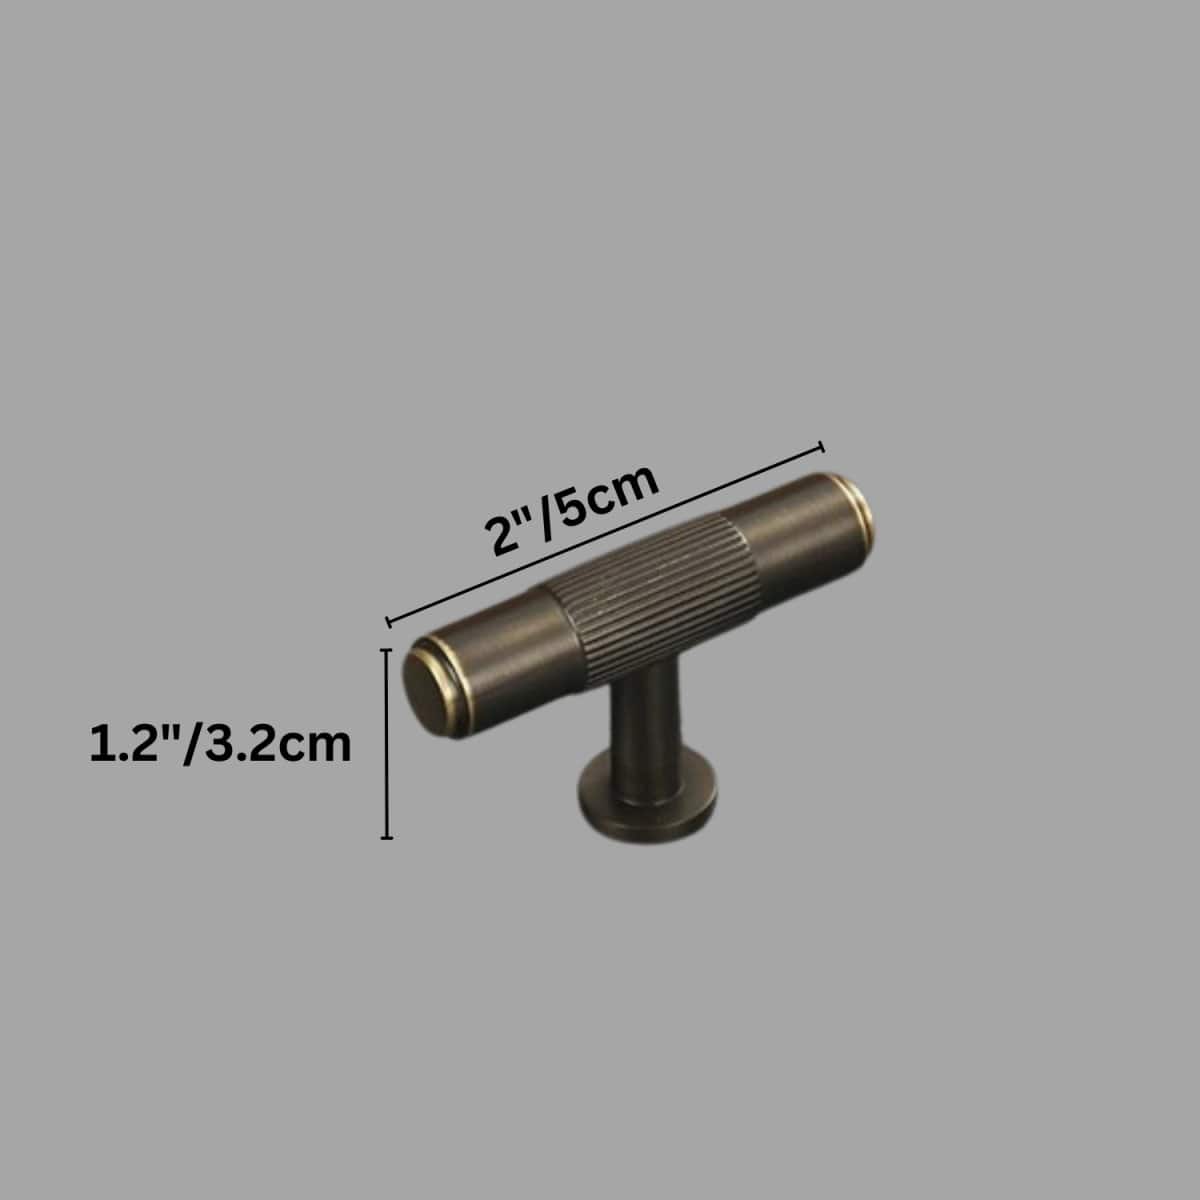 Residence Supply T Knob: 2" x 1.2" / 5 x 3.2cm / Bronze Cepo Knob & Pull Bar